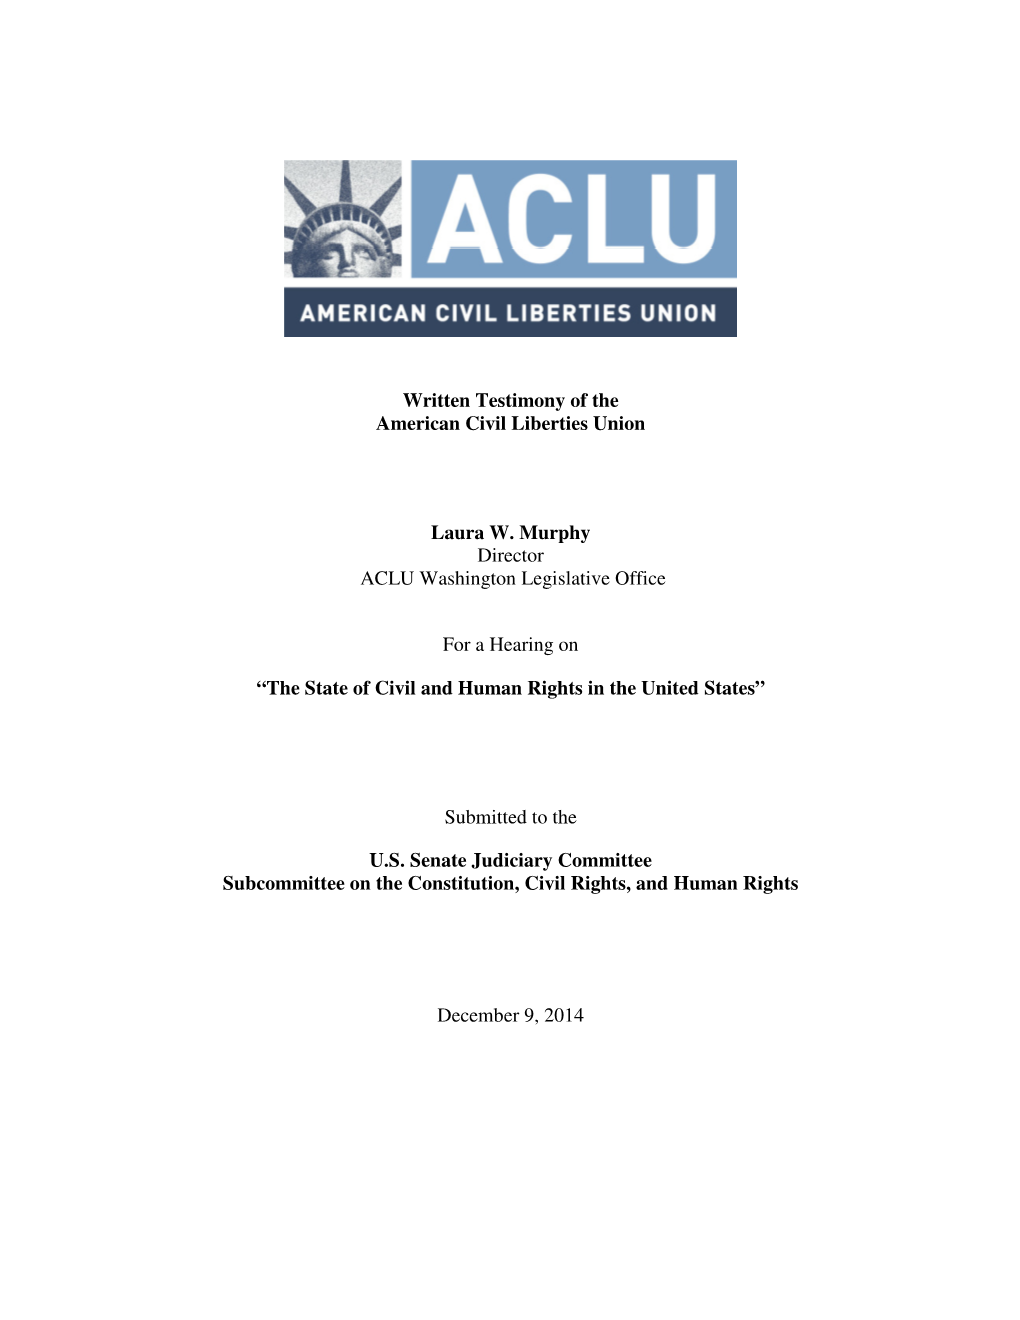 Written Testimony of the American Civil Liberties Union